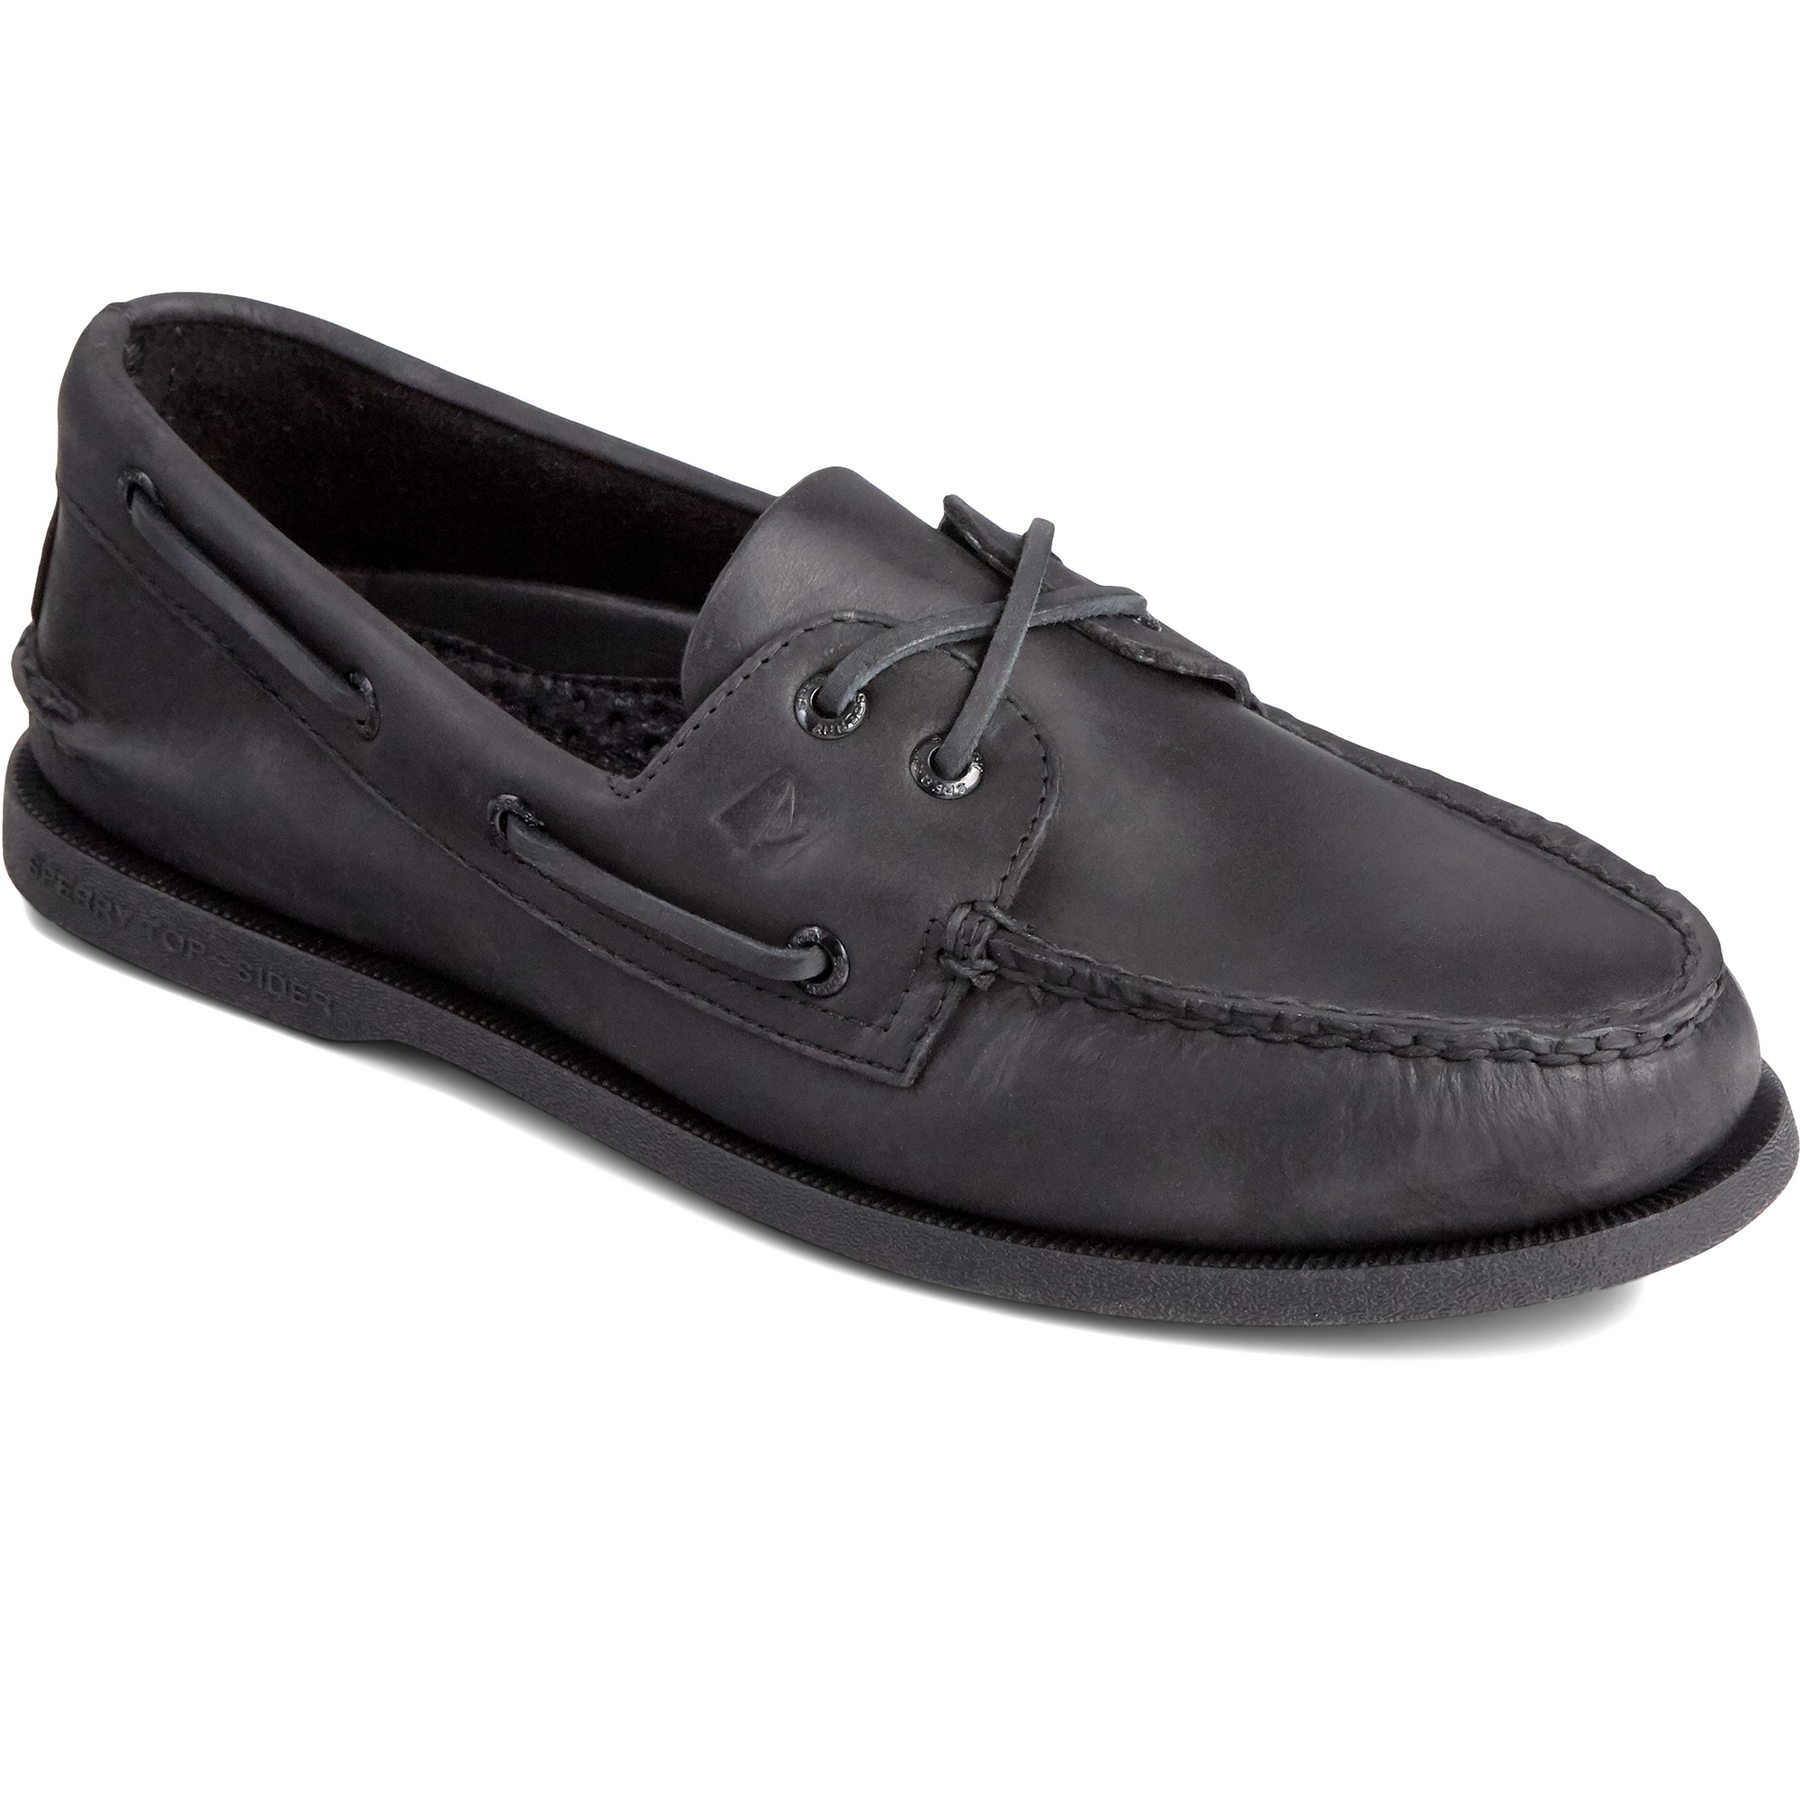 Men's Authentic Original Black Boat Shoe (08369811)